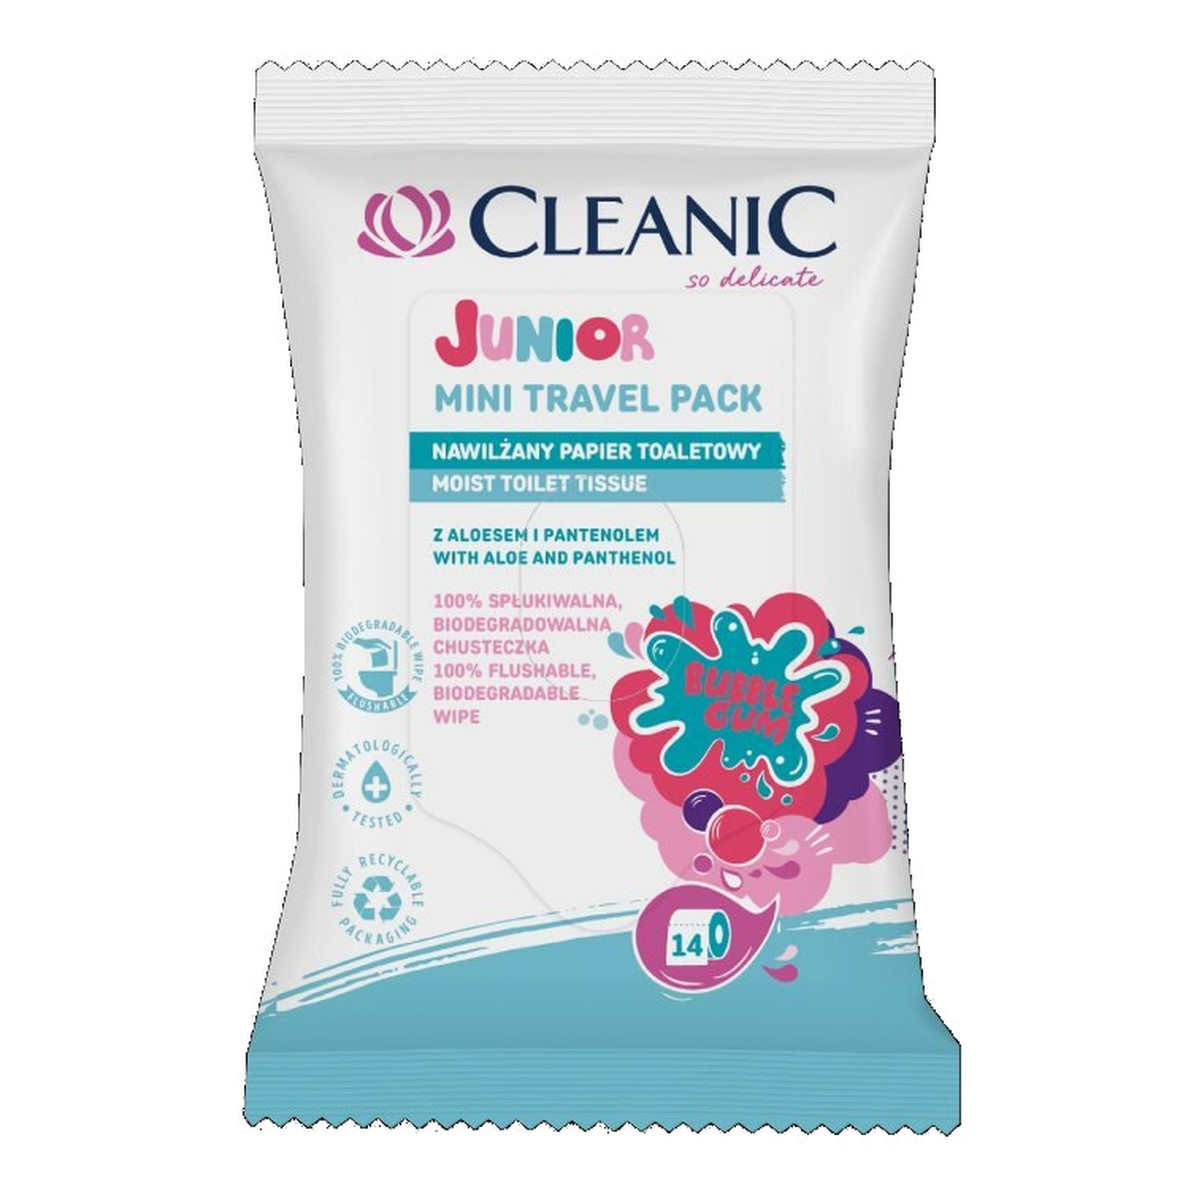 Cleanic Junior Mini Travel Pack Moist Toilet Tissue nawilżany papier toaletowy Bubble Gum 14szt.